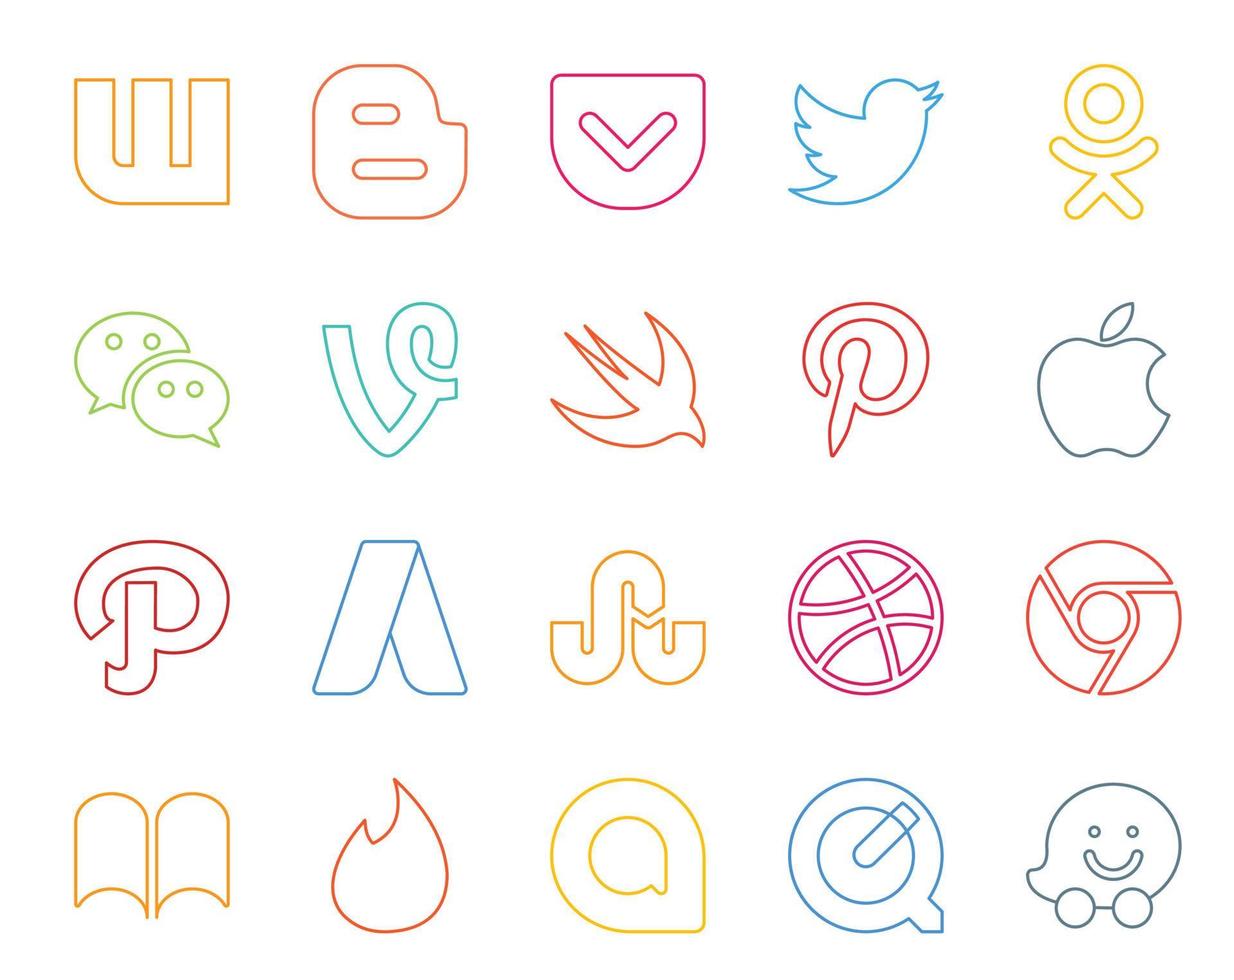 paquete de 20 íconos de redes sociales que incluye ibooks dribbble vine stumbleupon path vector